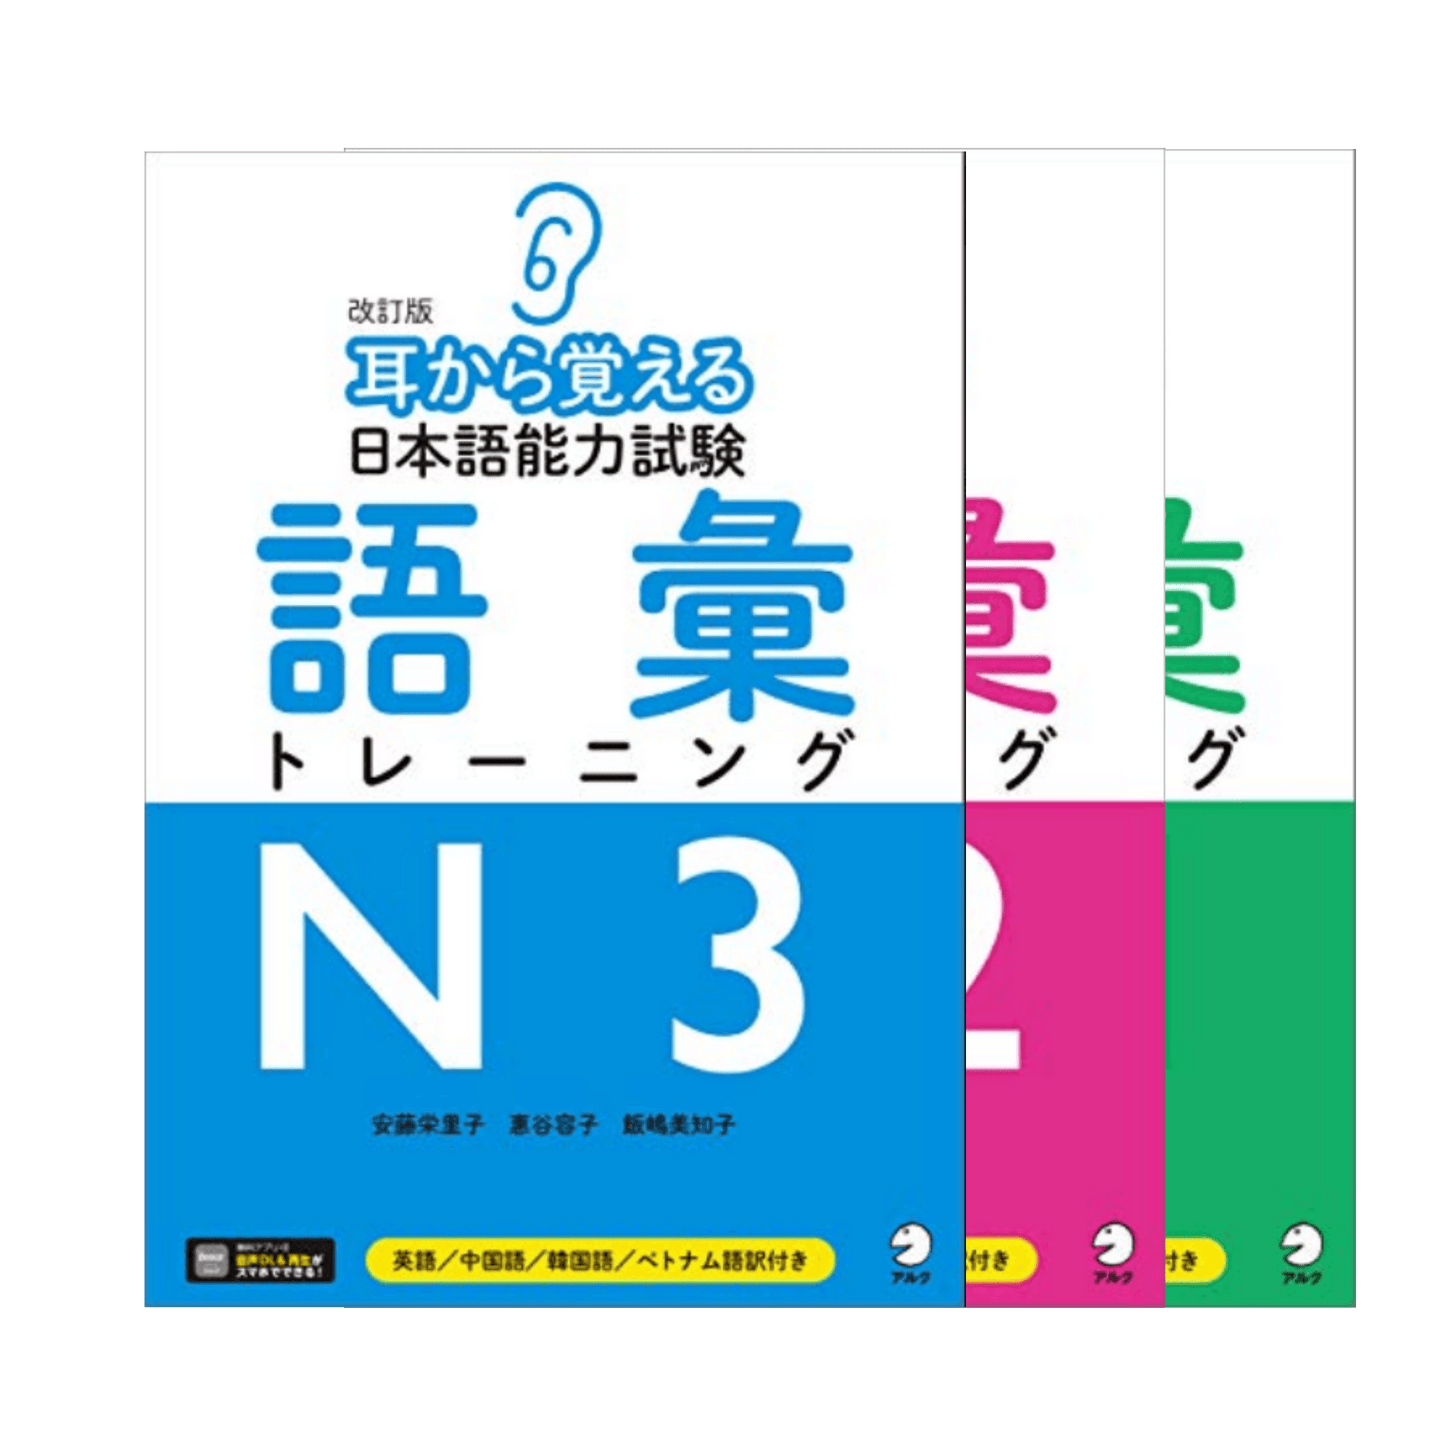 Manual Japonês | Mimi Kara Oboeru Nihongo Nōryoku Shiken: Vocabulário ChitoroShop